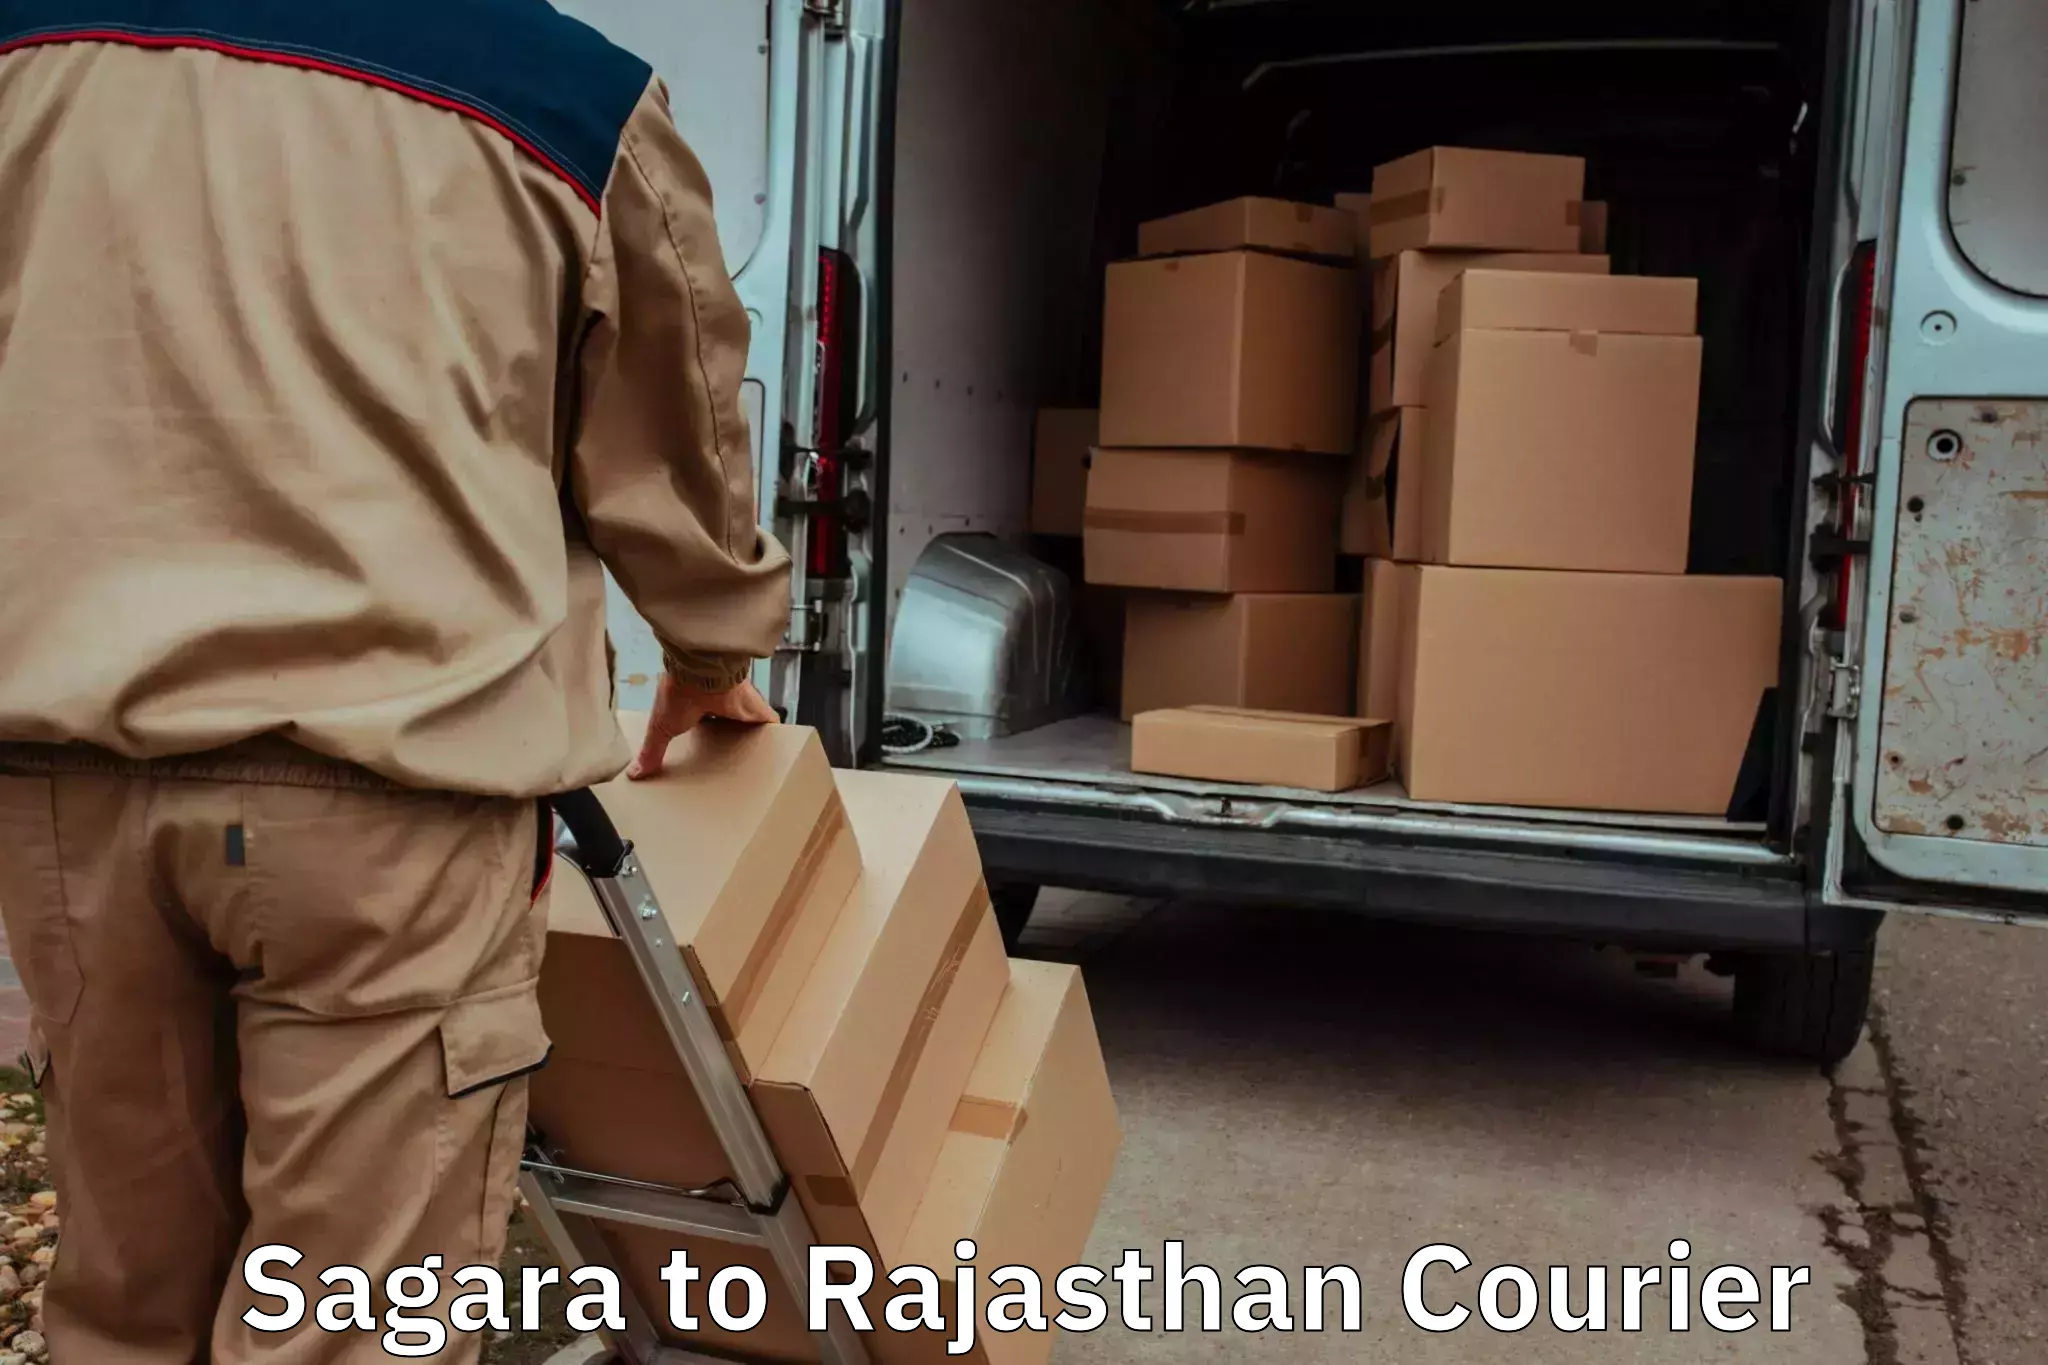 Professional moving company Sagara to Gotan